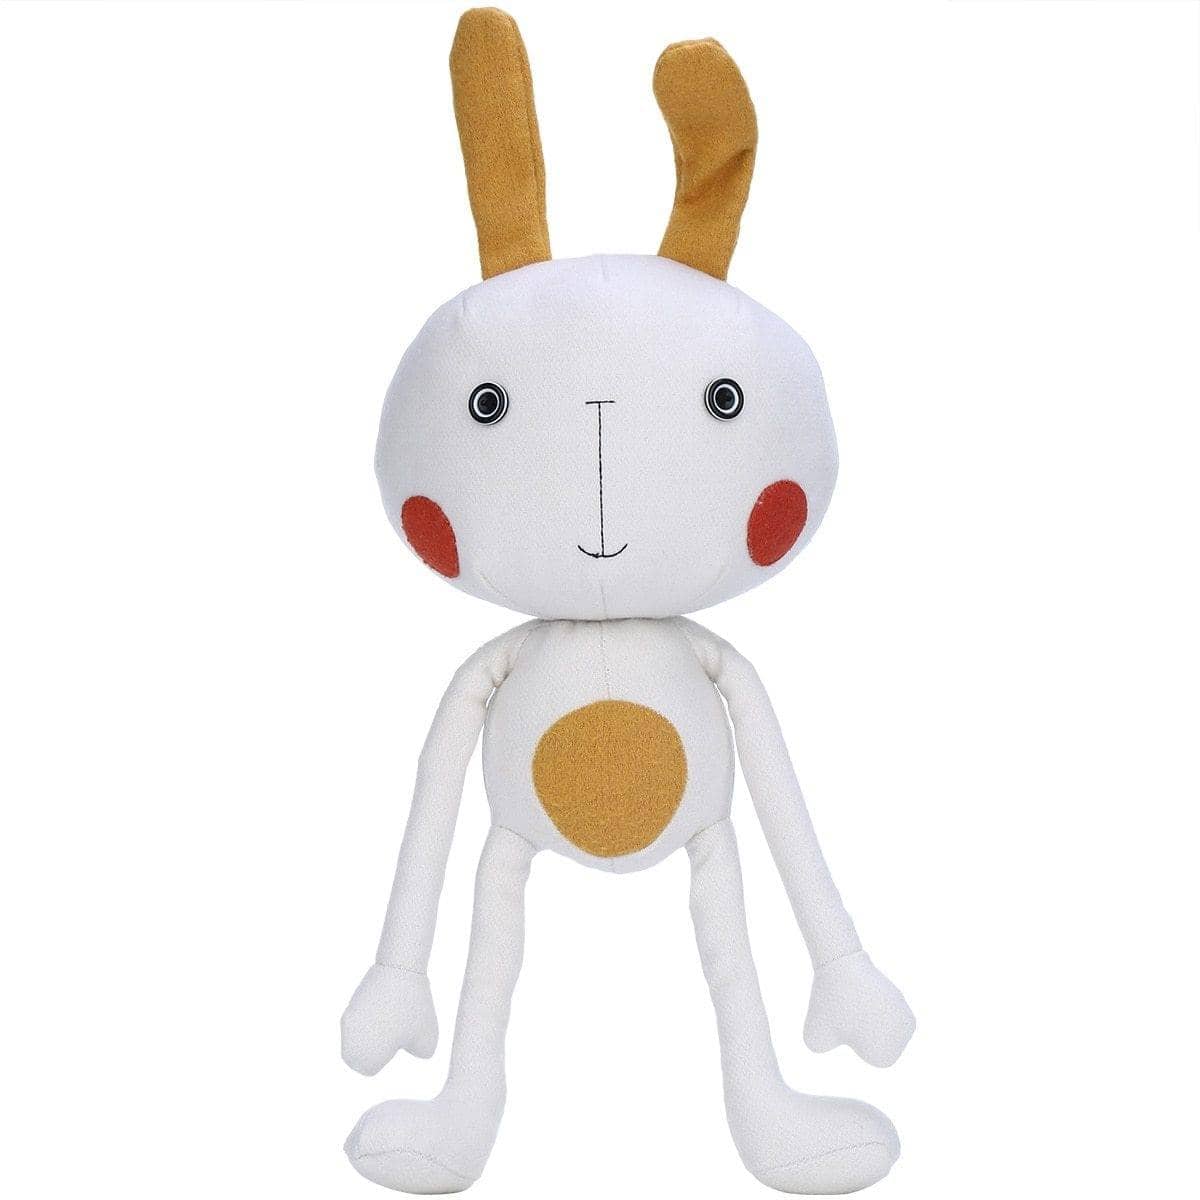 Yoga Bunny Cartoon Doll Toy - Cute & Playful Yoga Companion